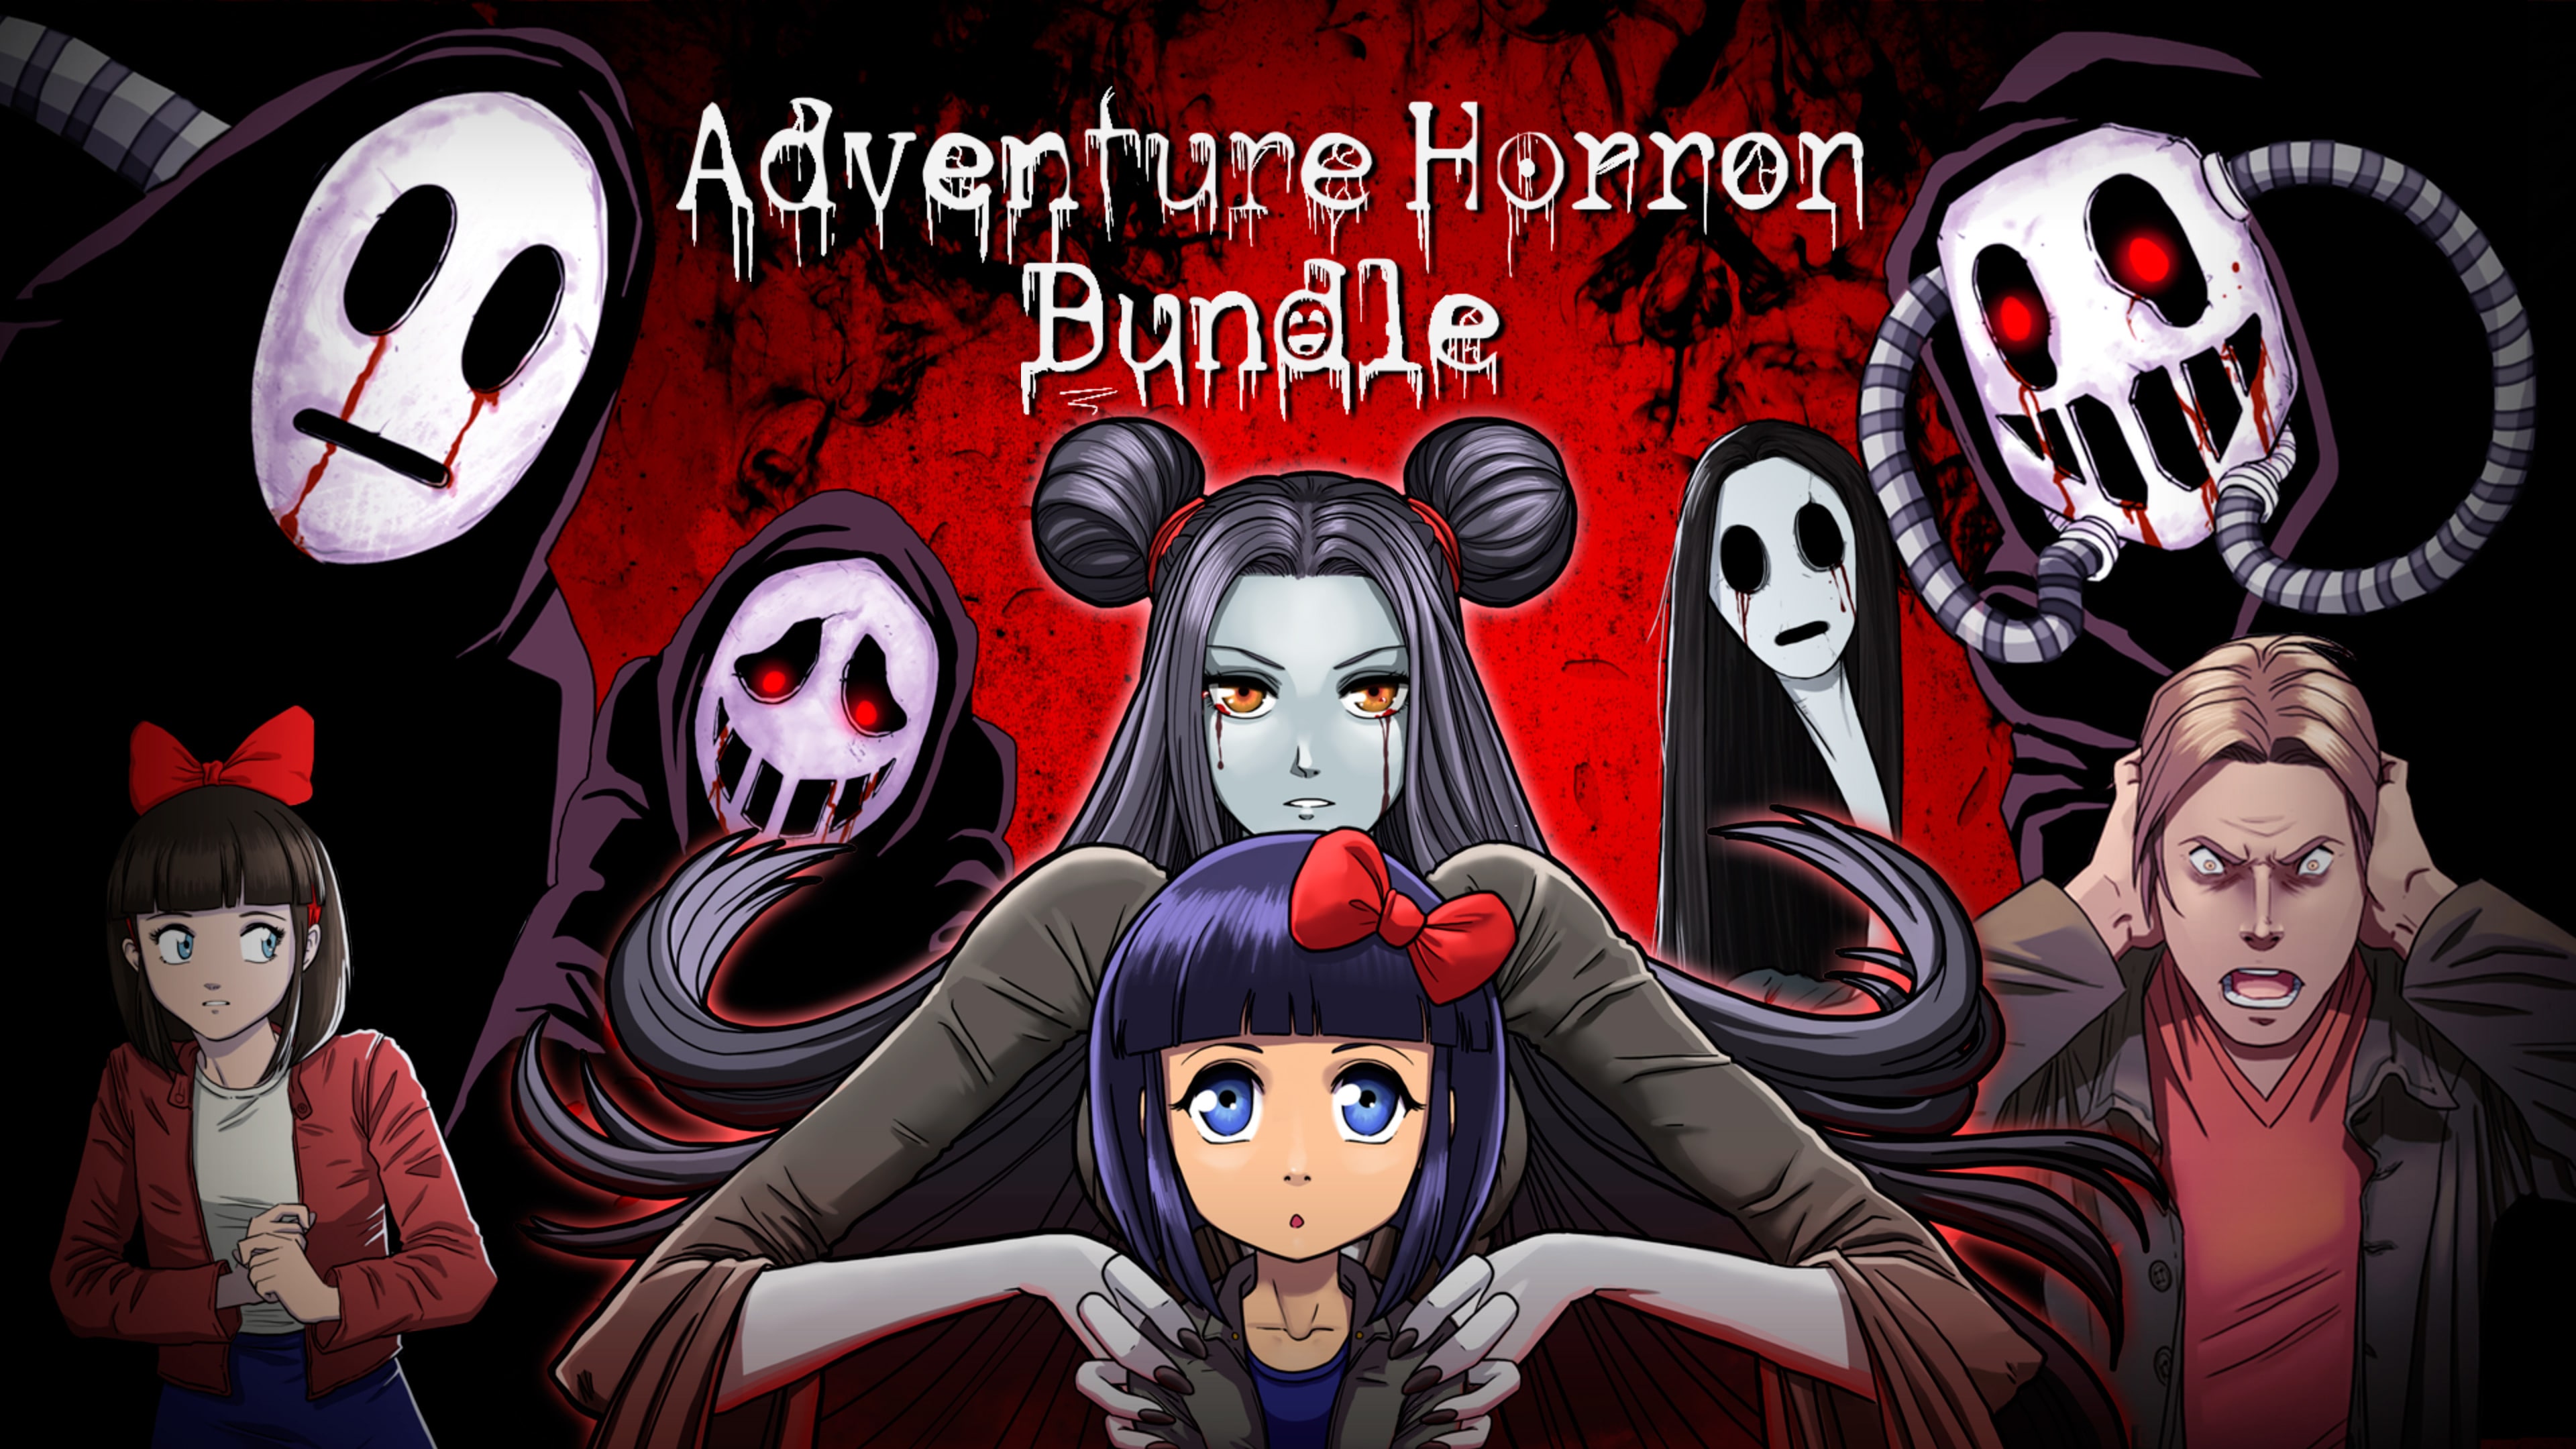 Adventure Horror Bundle